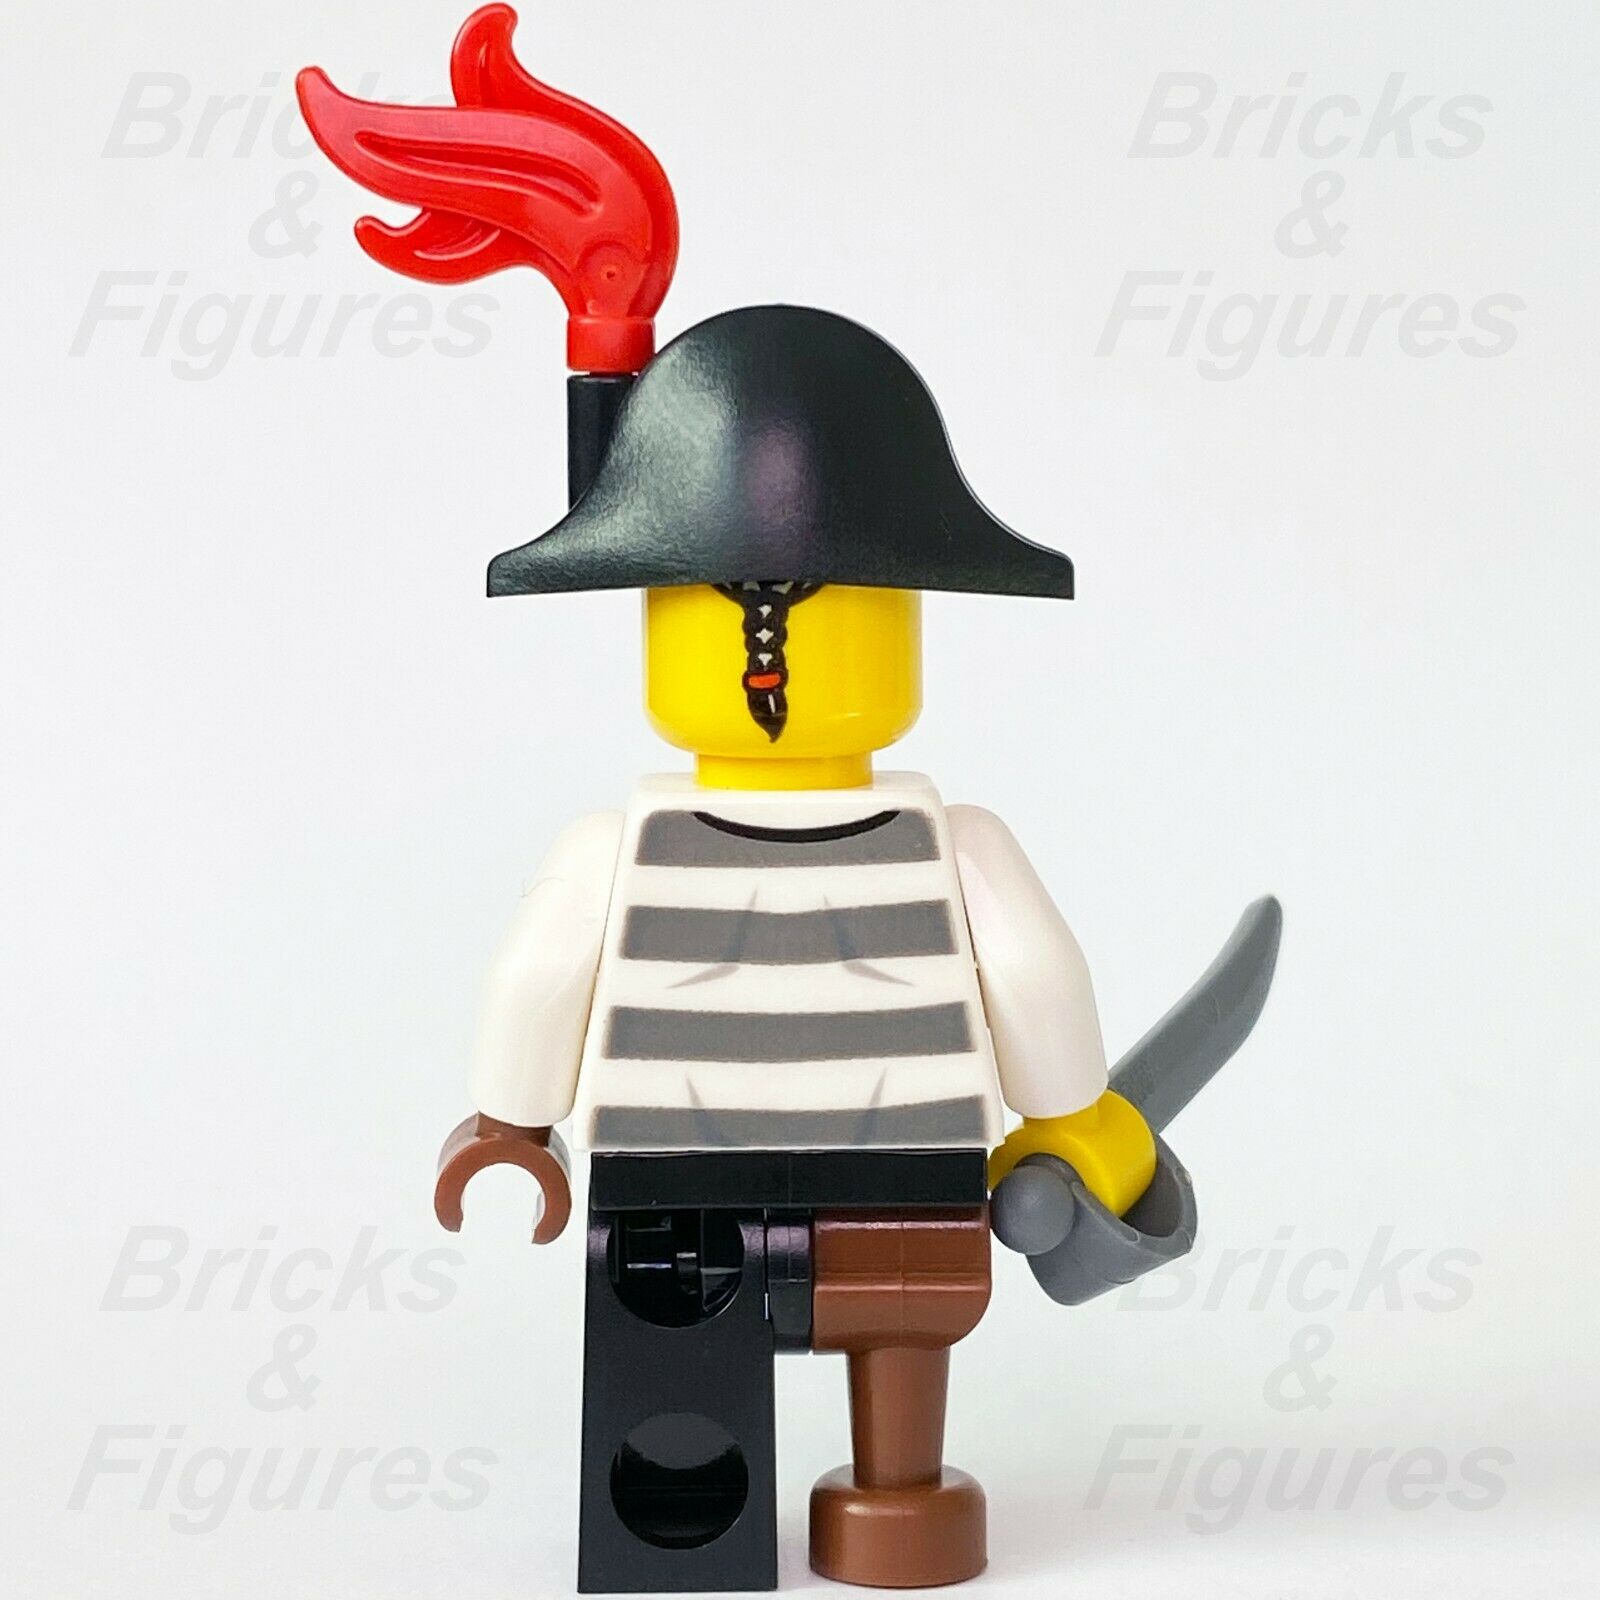 New Ninjago LEGO Captain Soto Pirate Prison Outfit Skybound Minifigure 70591 - Bricks & Figures